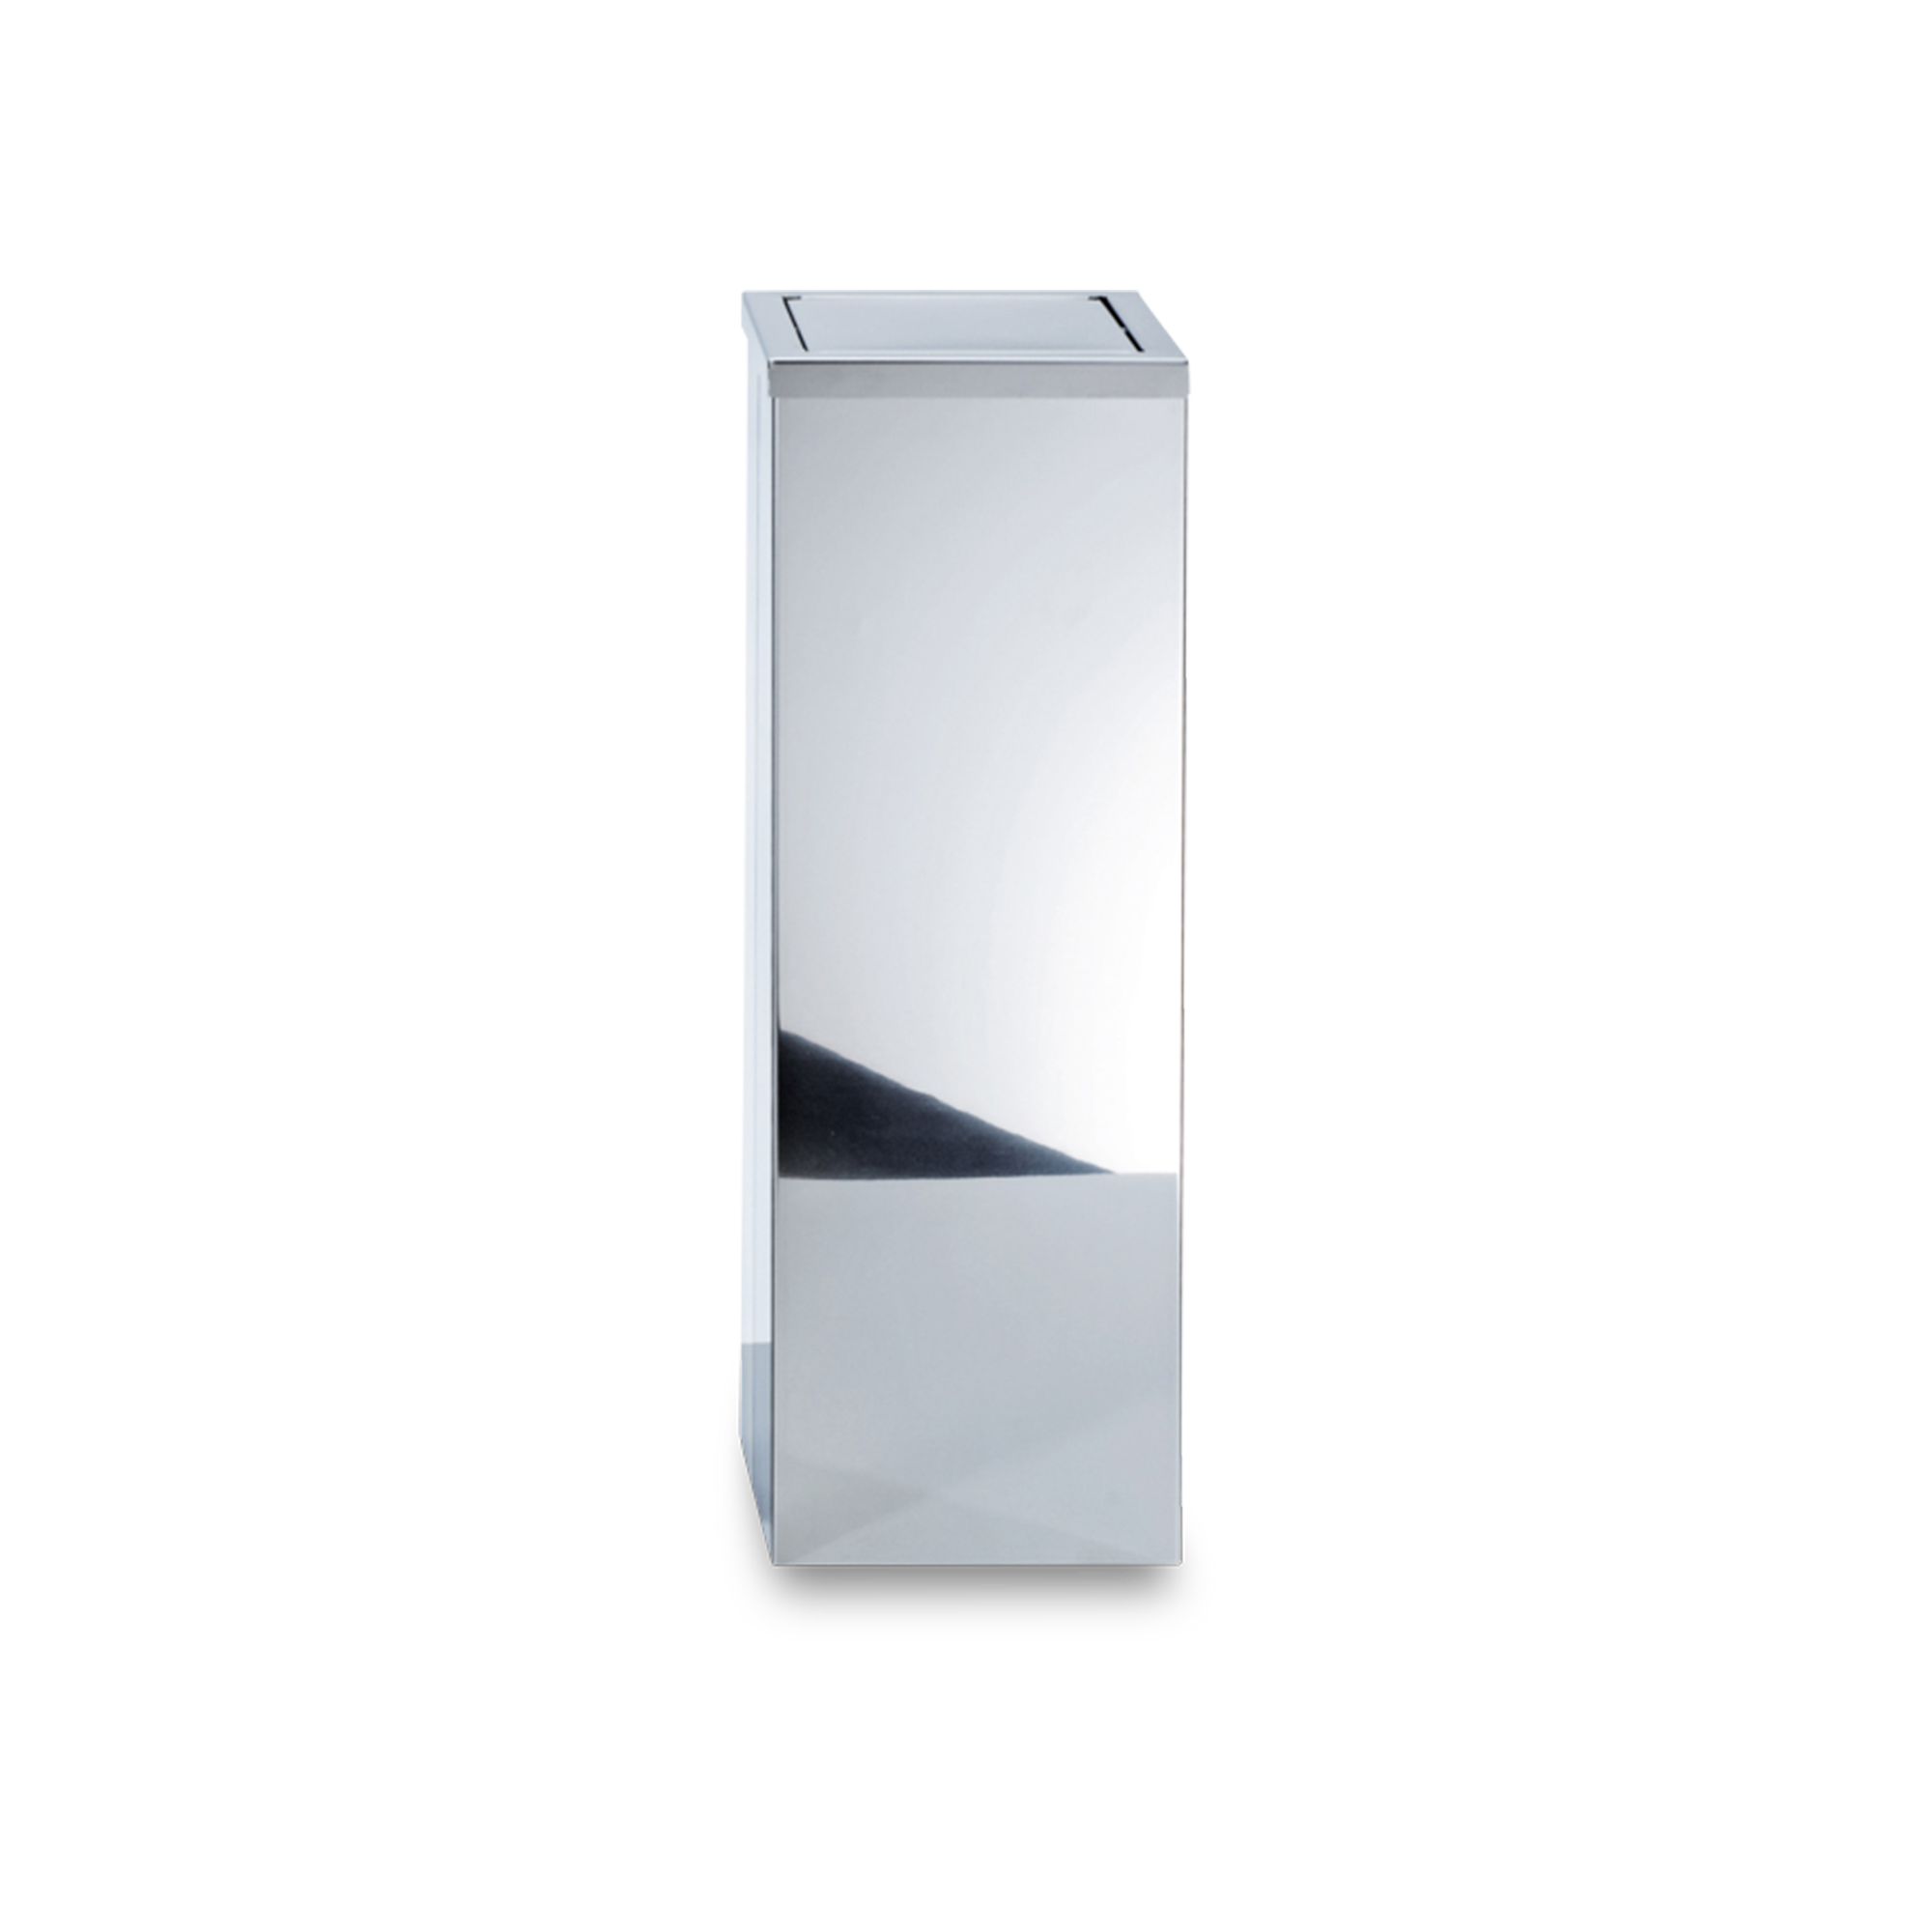 An elegant Waste Bin featured in stainless steel.